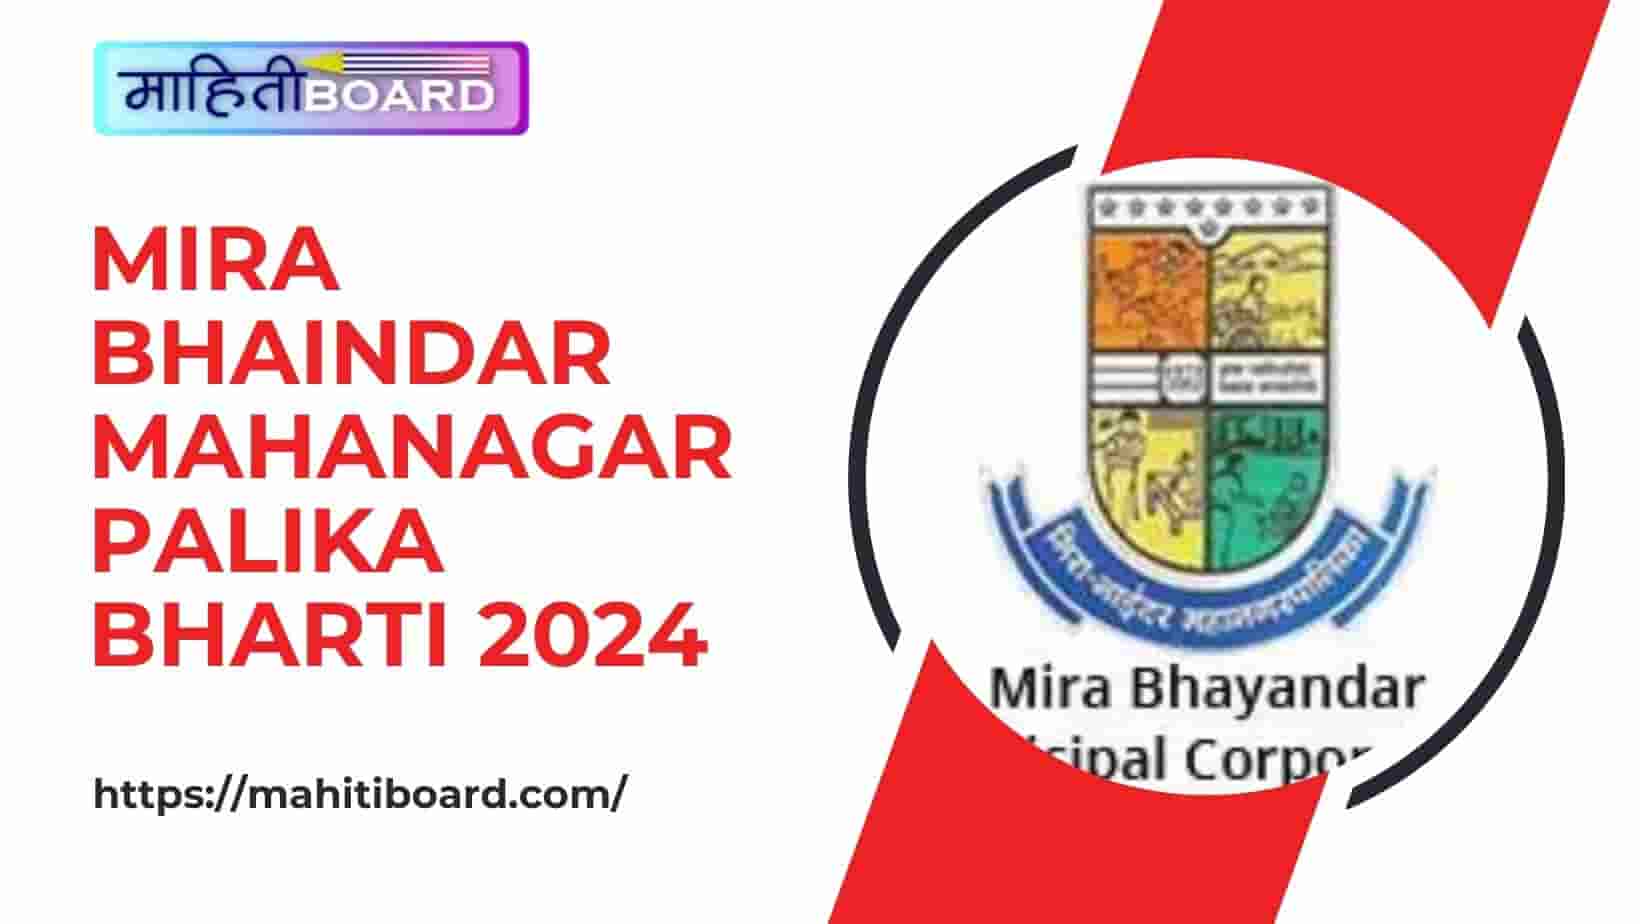 Mira Bhaindar Mahanagarpalika Bharti 2024